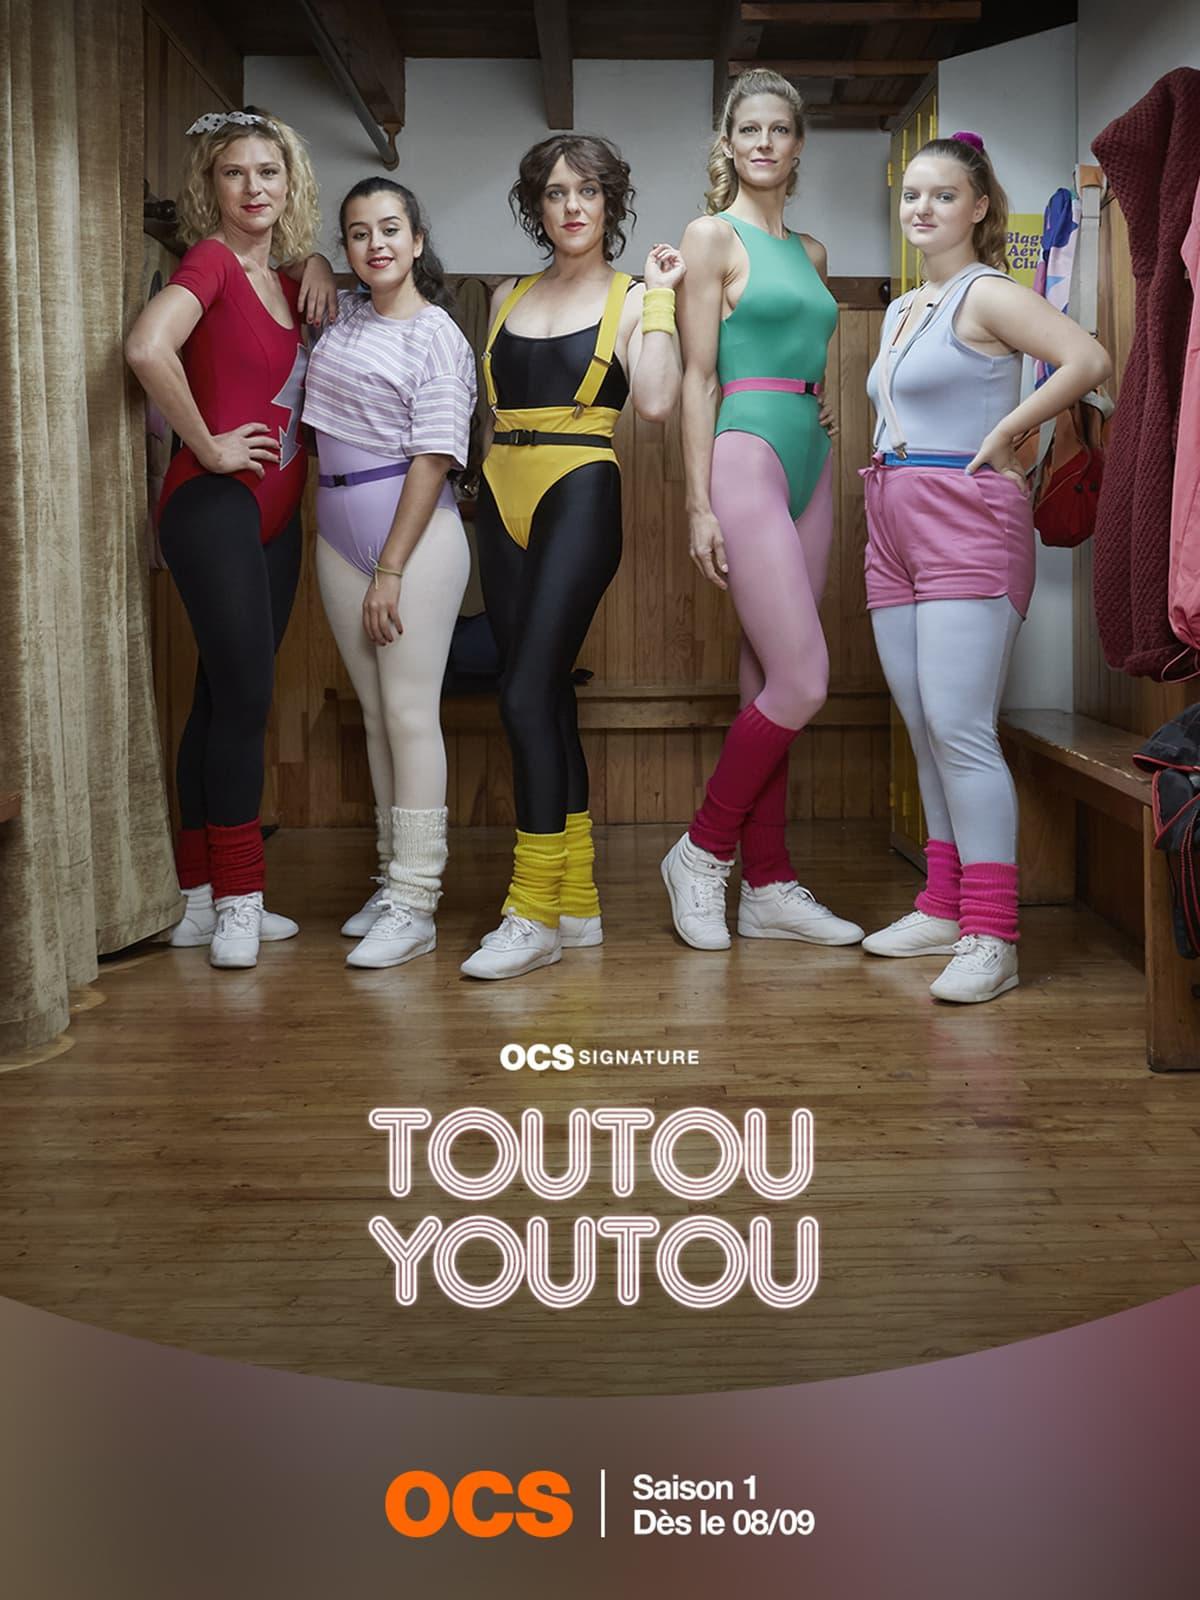 TV ratings for Toutouyoutou in Brazil. OCS TV series